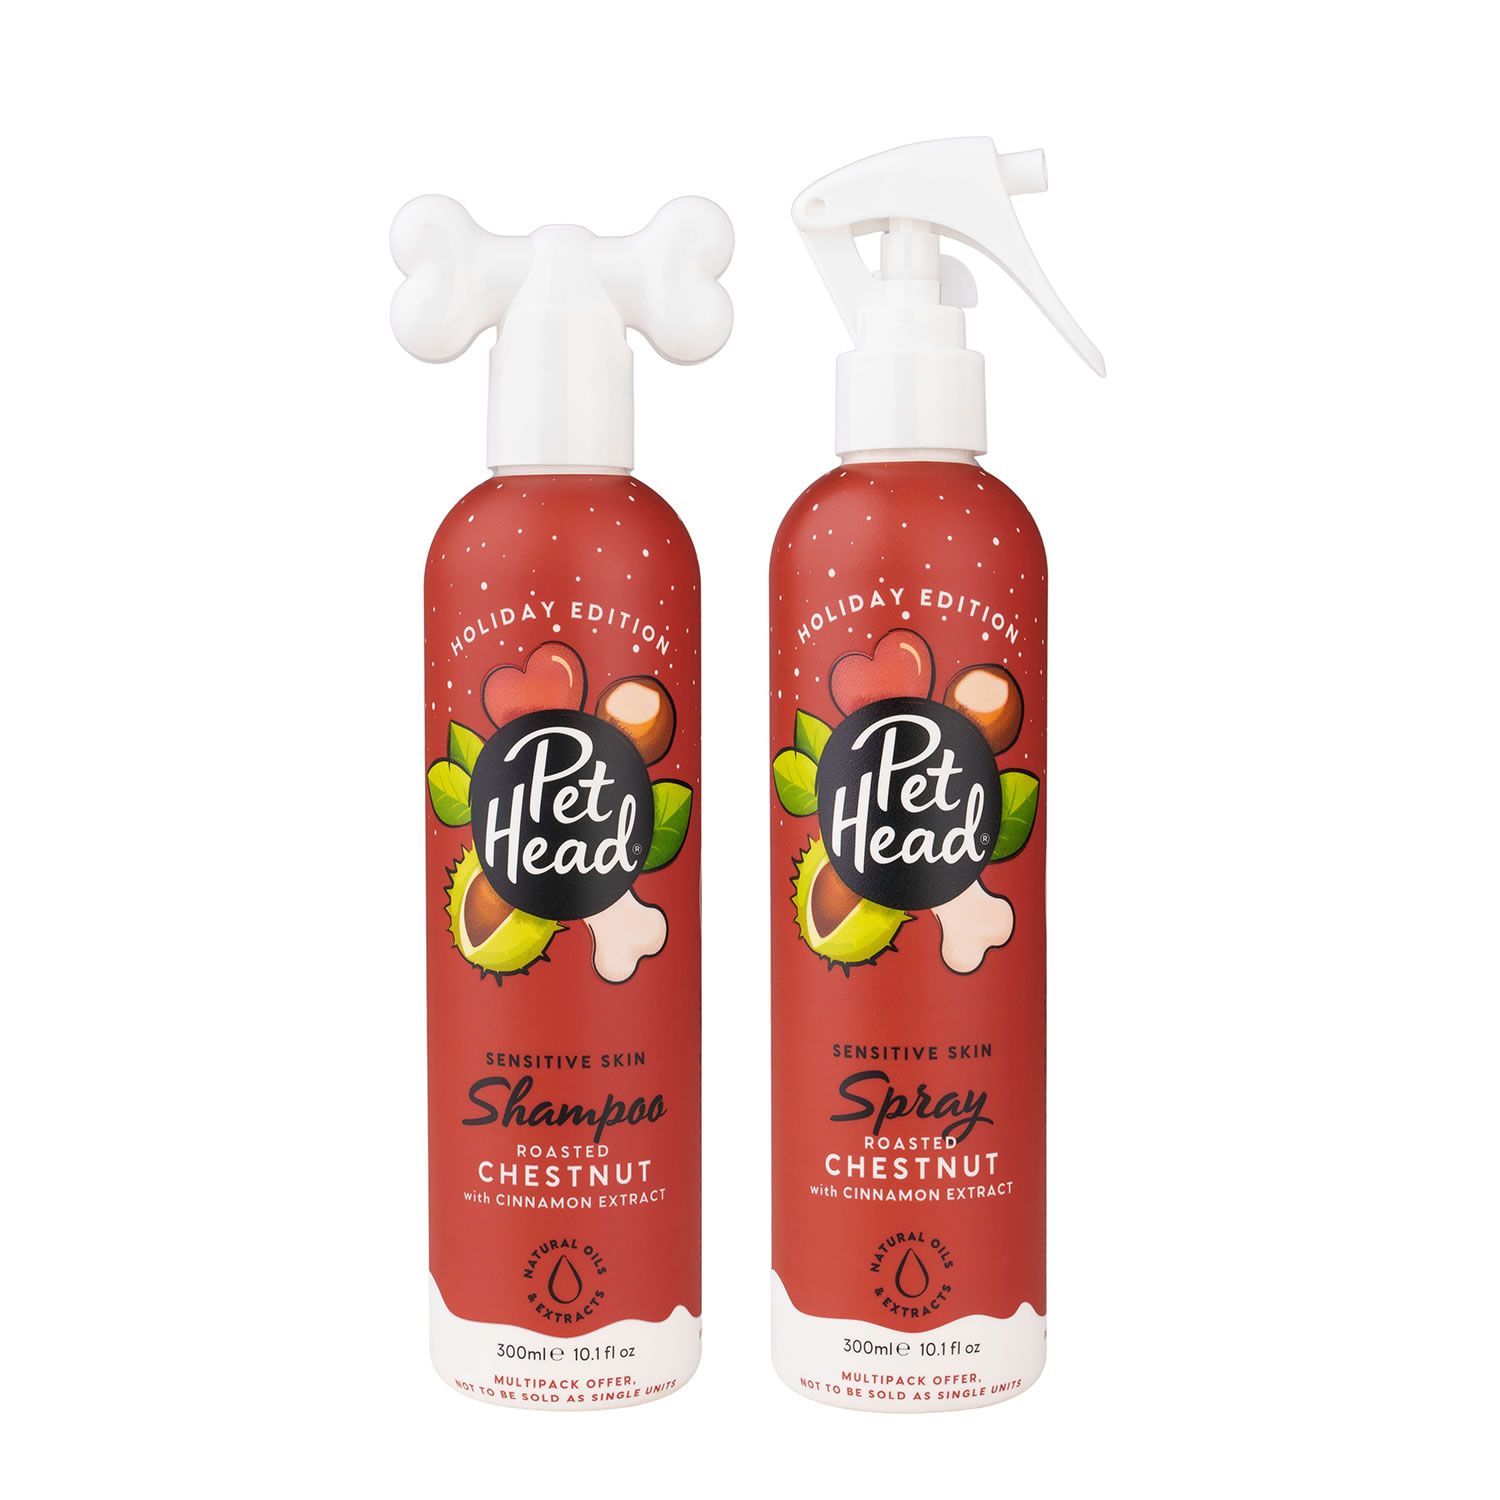 Pet Head Holiday Sensitive Skin Shampoo/Spray Roasted Chestnut - 300 Ml x 2 Pack